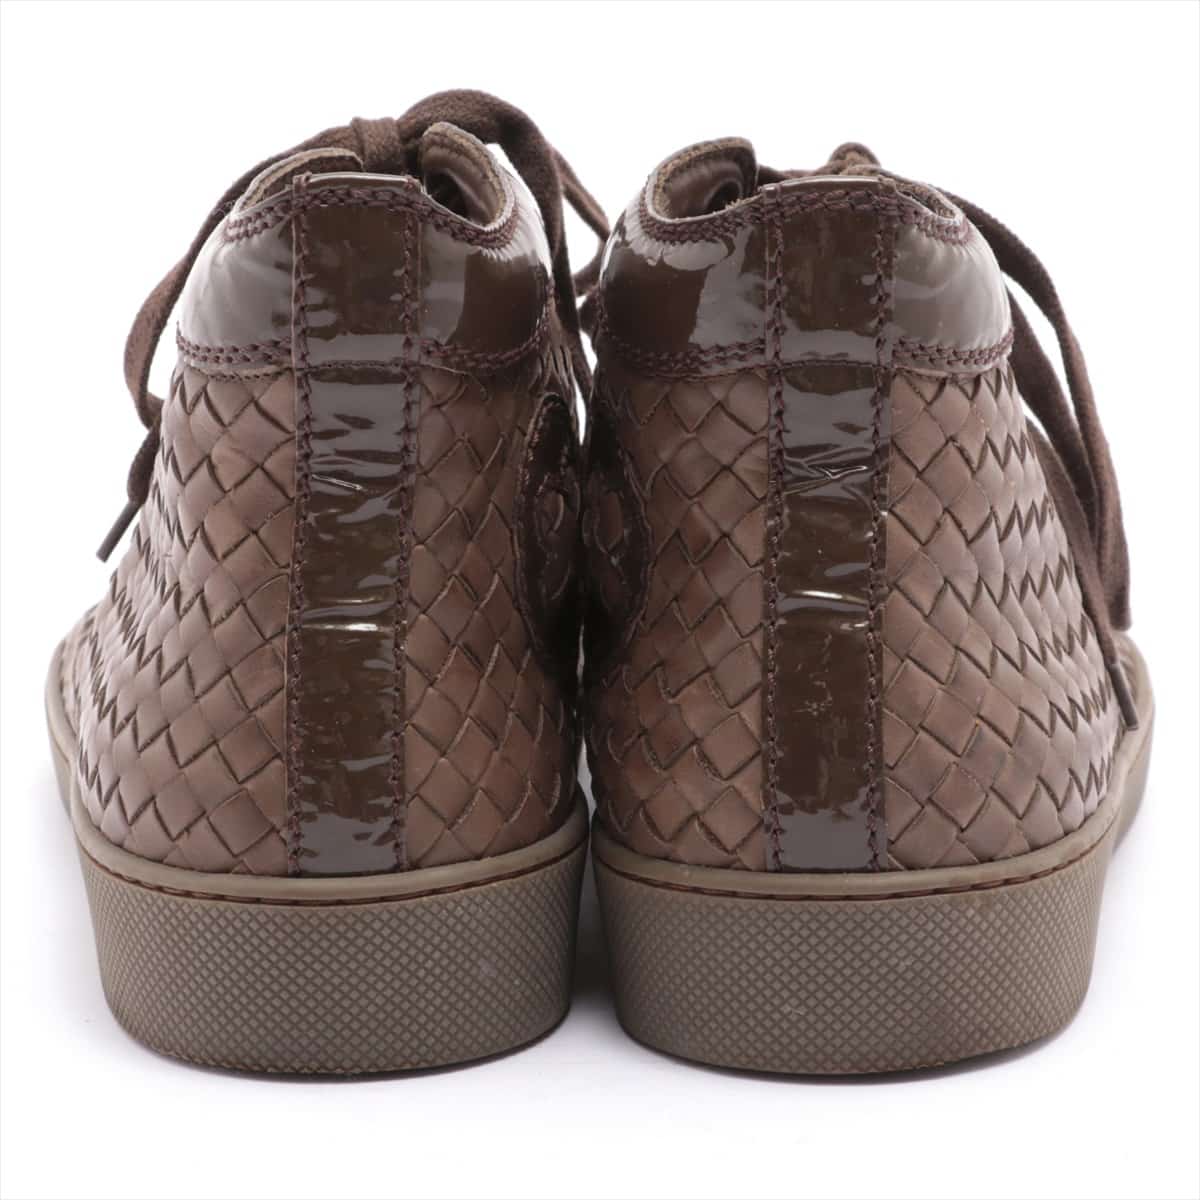 Bottega Veneta Intrecciato Leather High-top Sneakers Unknown size Men's Brown Lace up